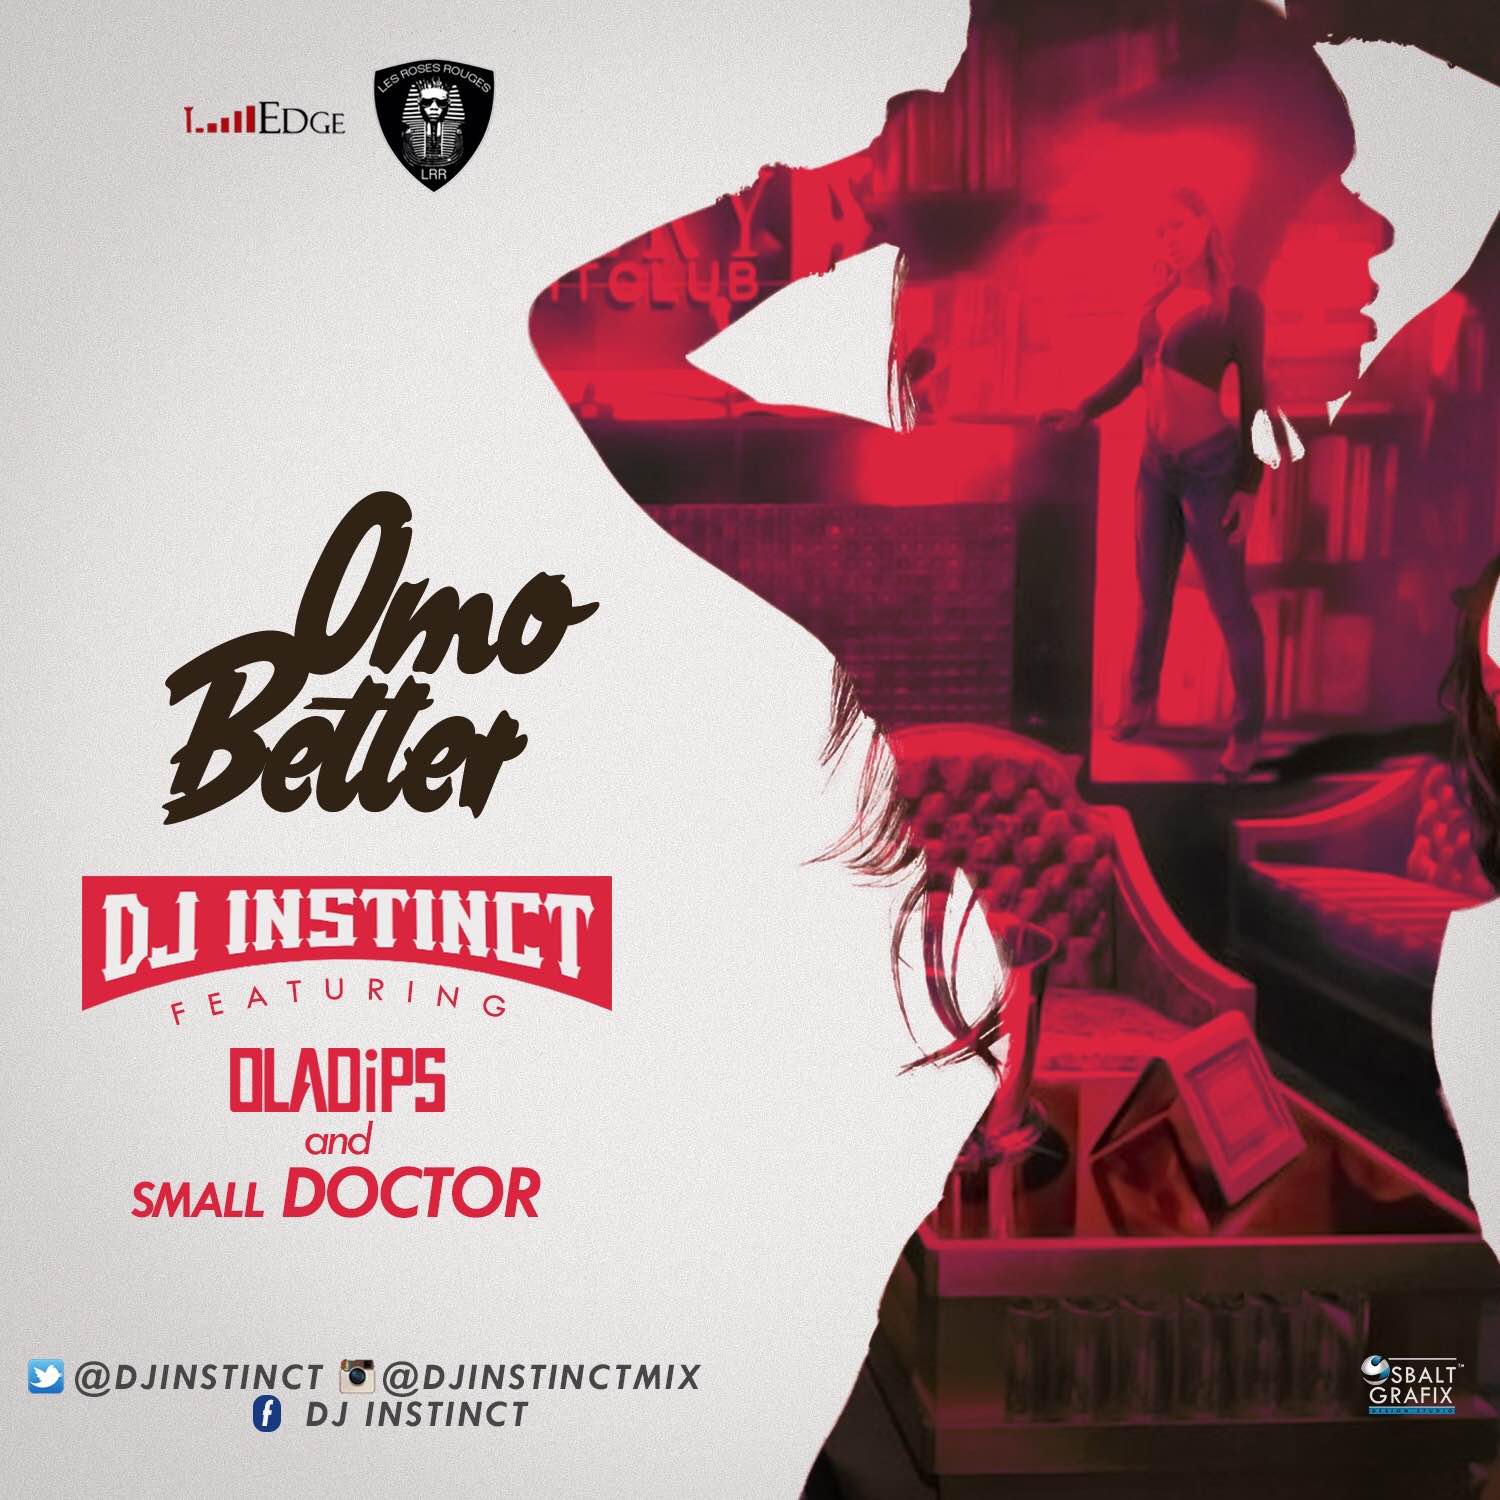 DJ Instinct ft. Ola Dips & Small Doctor - OMO BETTER Artwork | AceWorldTeam.com